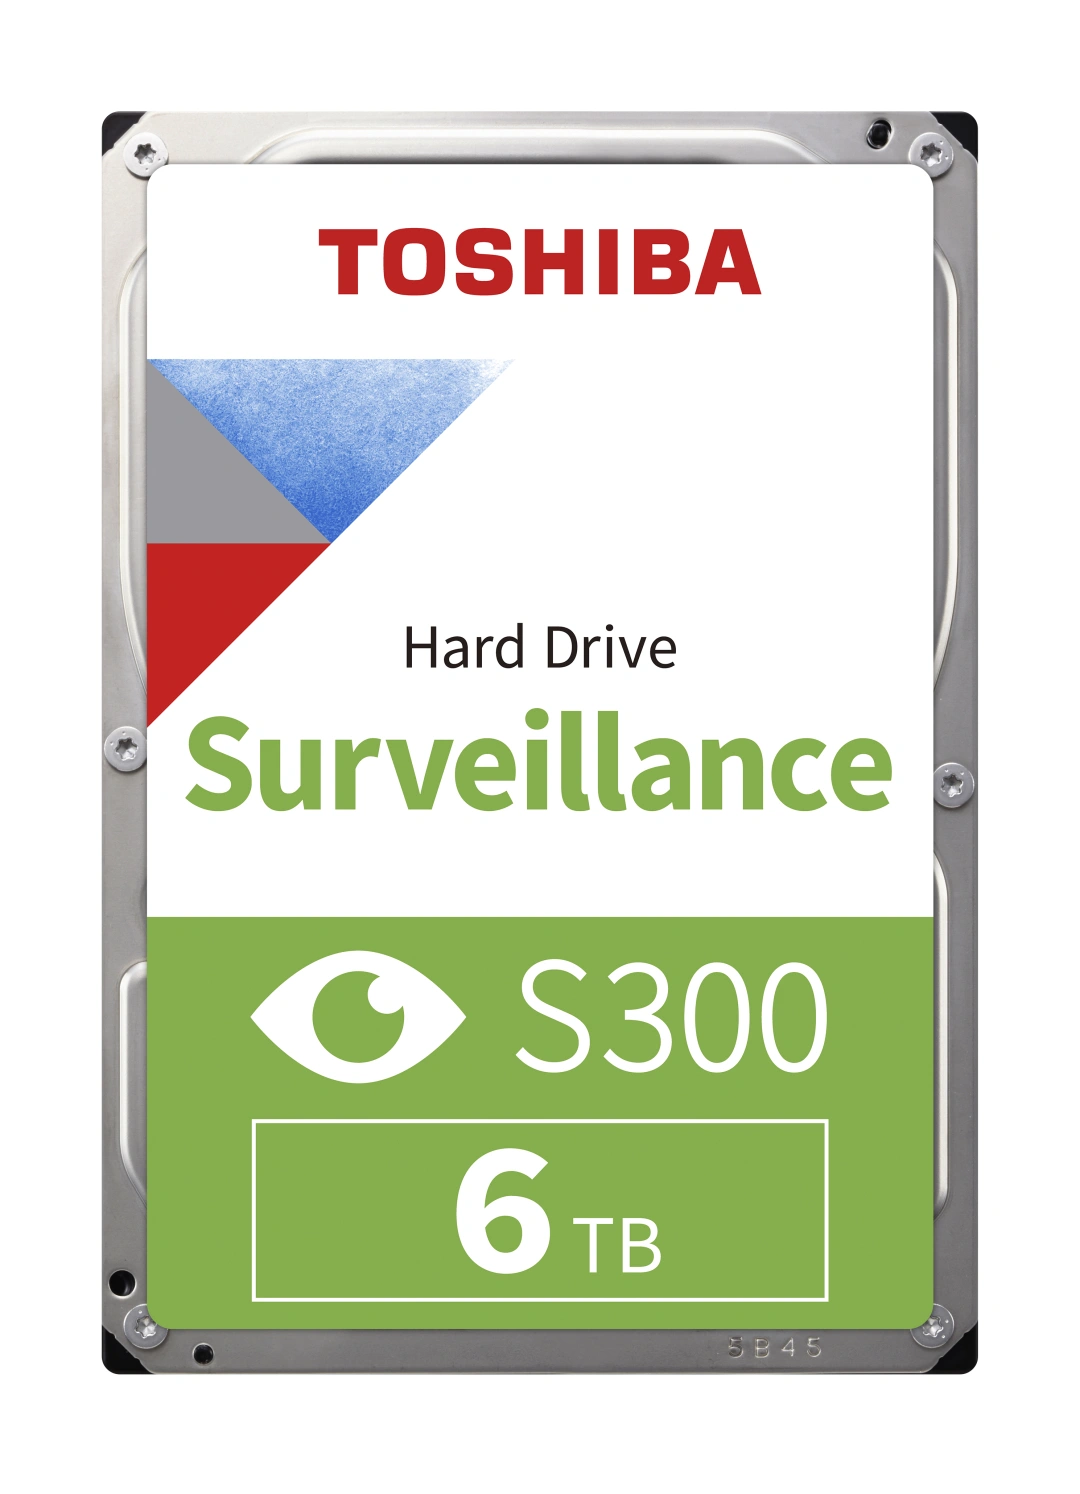 Toshiba S300 Surveillance 6TB